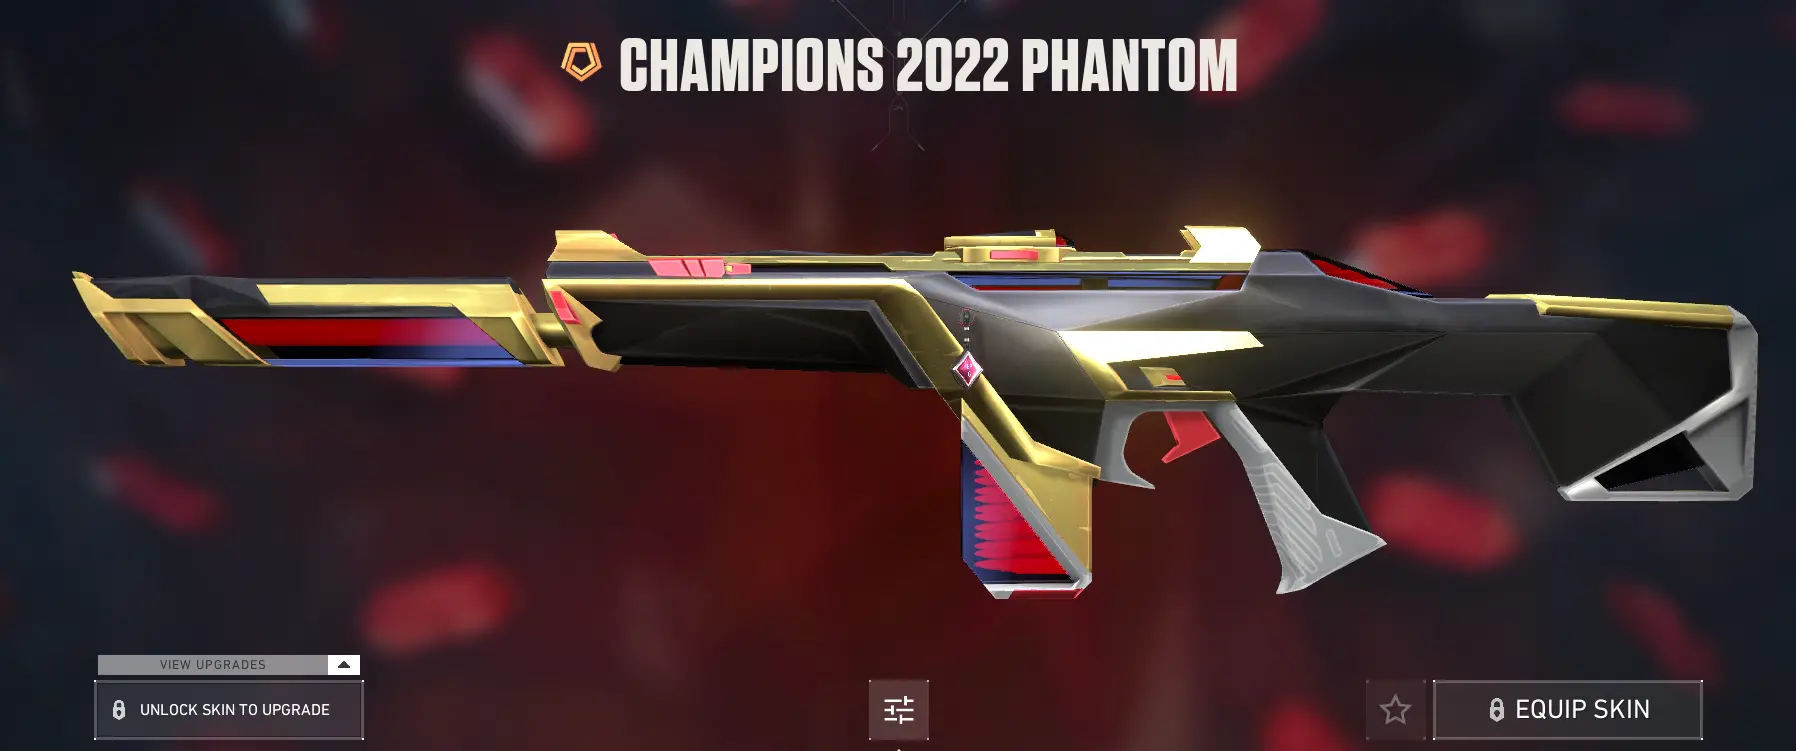 Champions 2022 Phantom